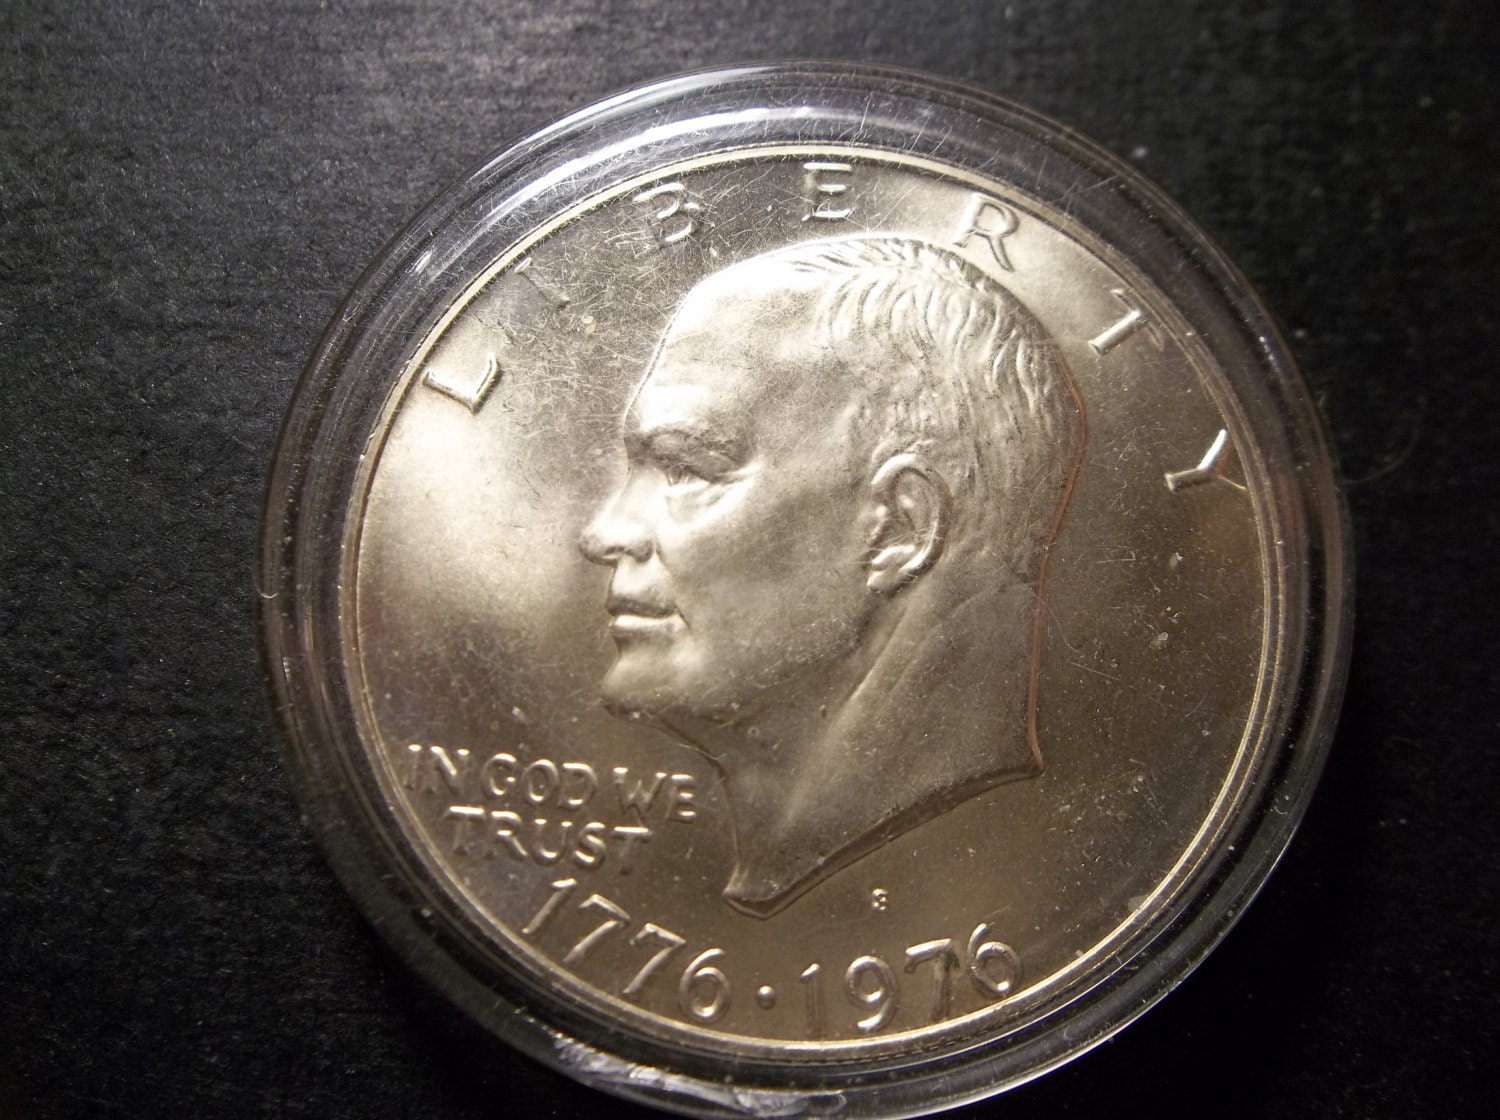 1972 40% silver ike dollar value